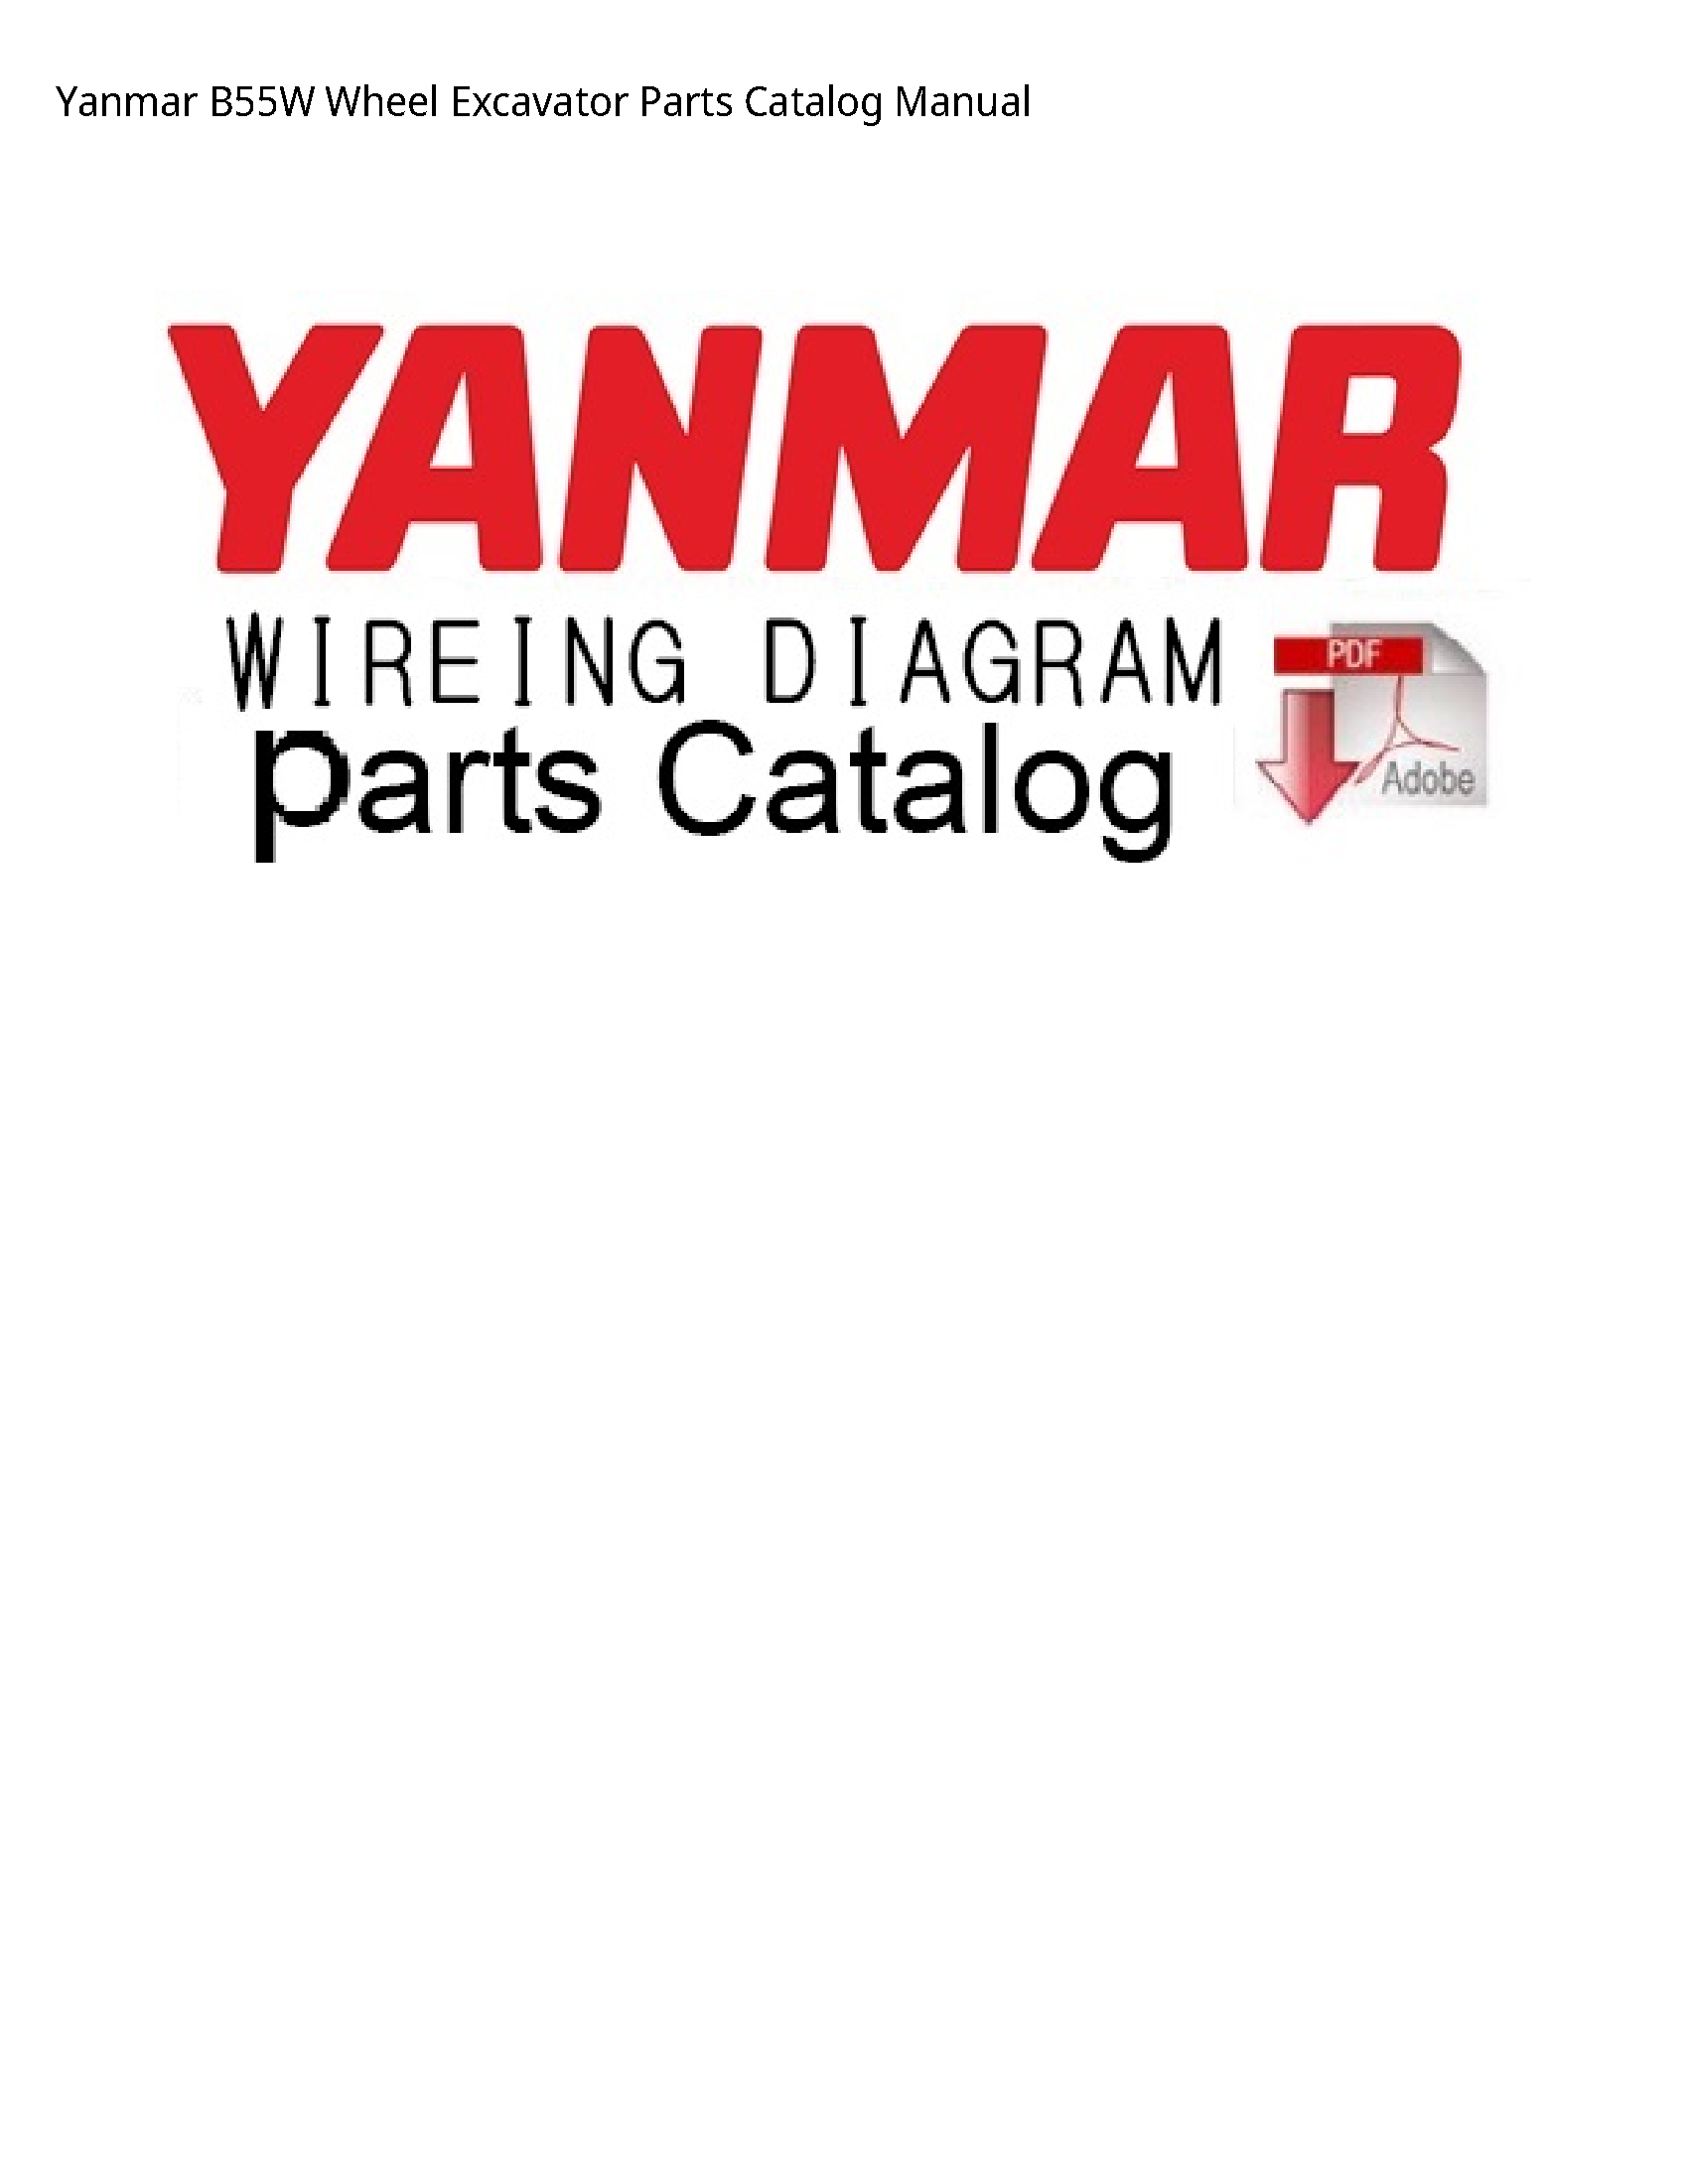 Yanmar B55W Wheel Excavator Parts Catalog manual